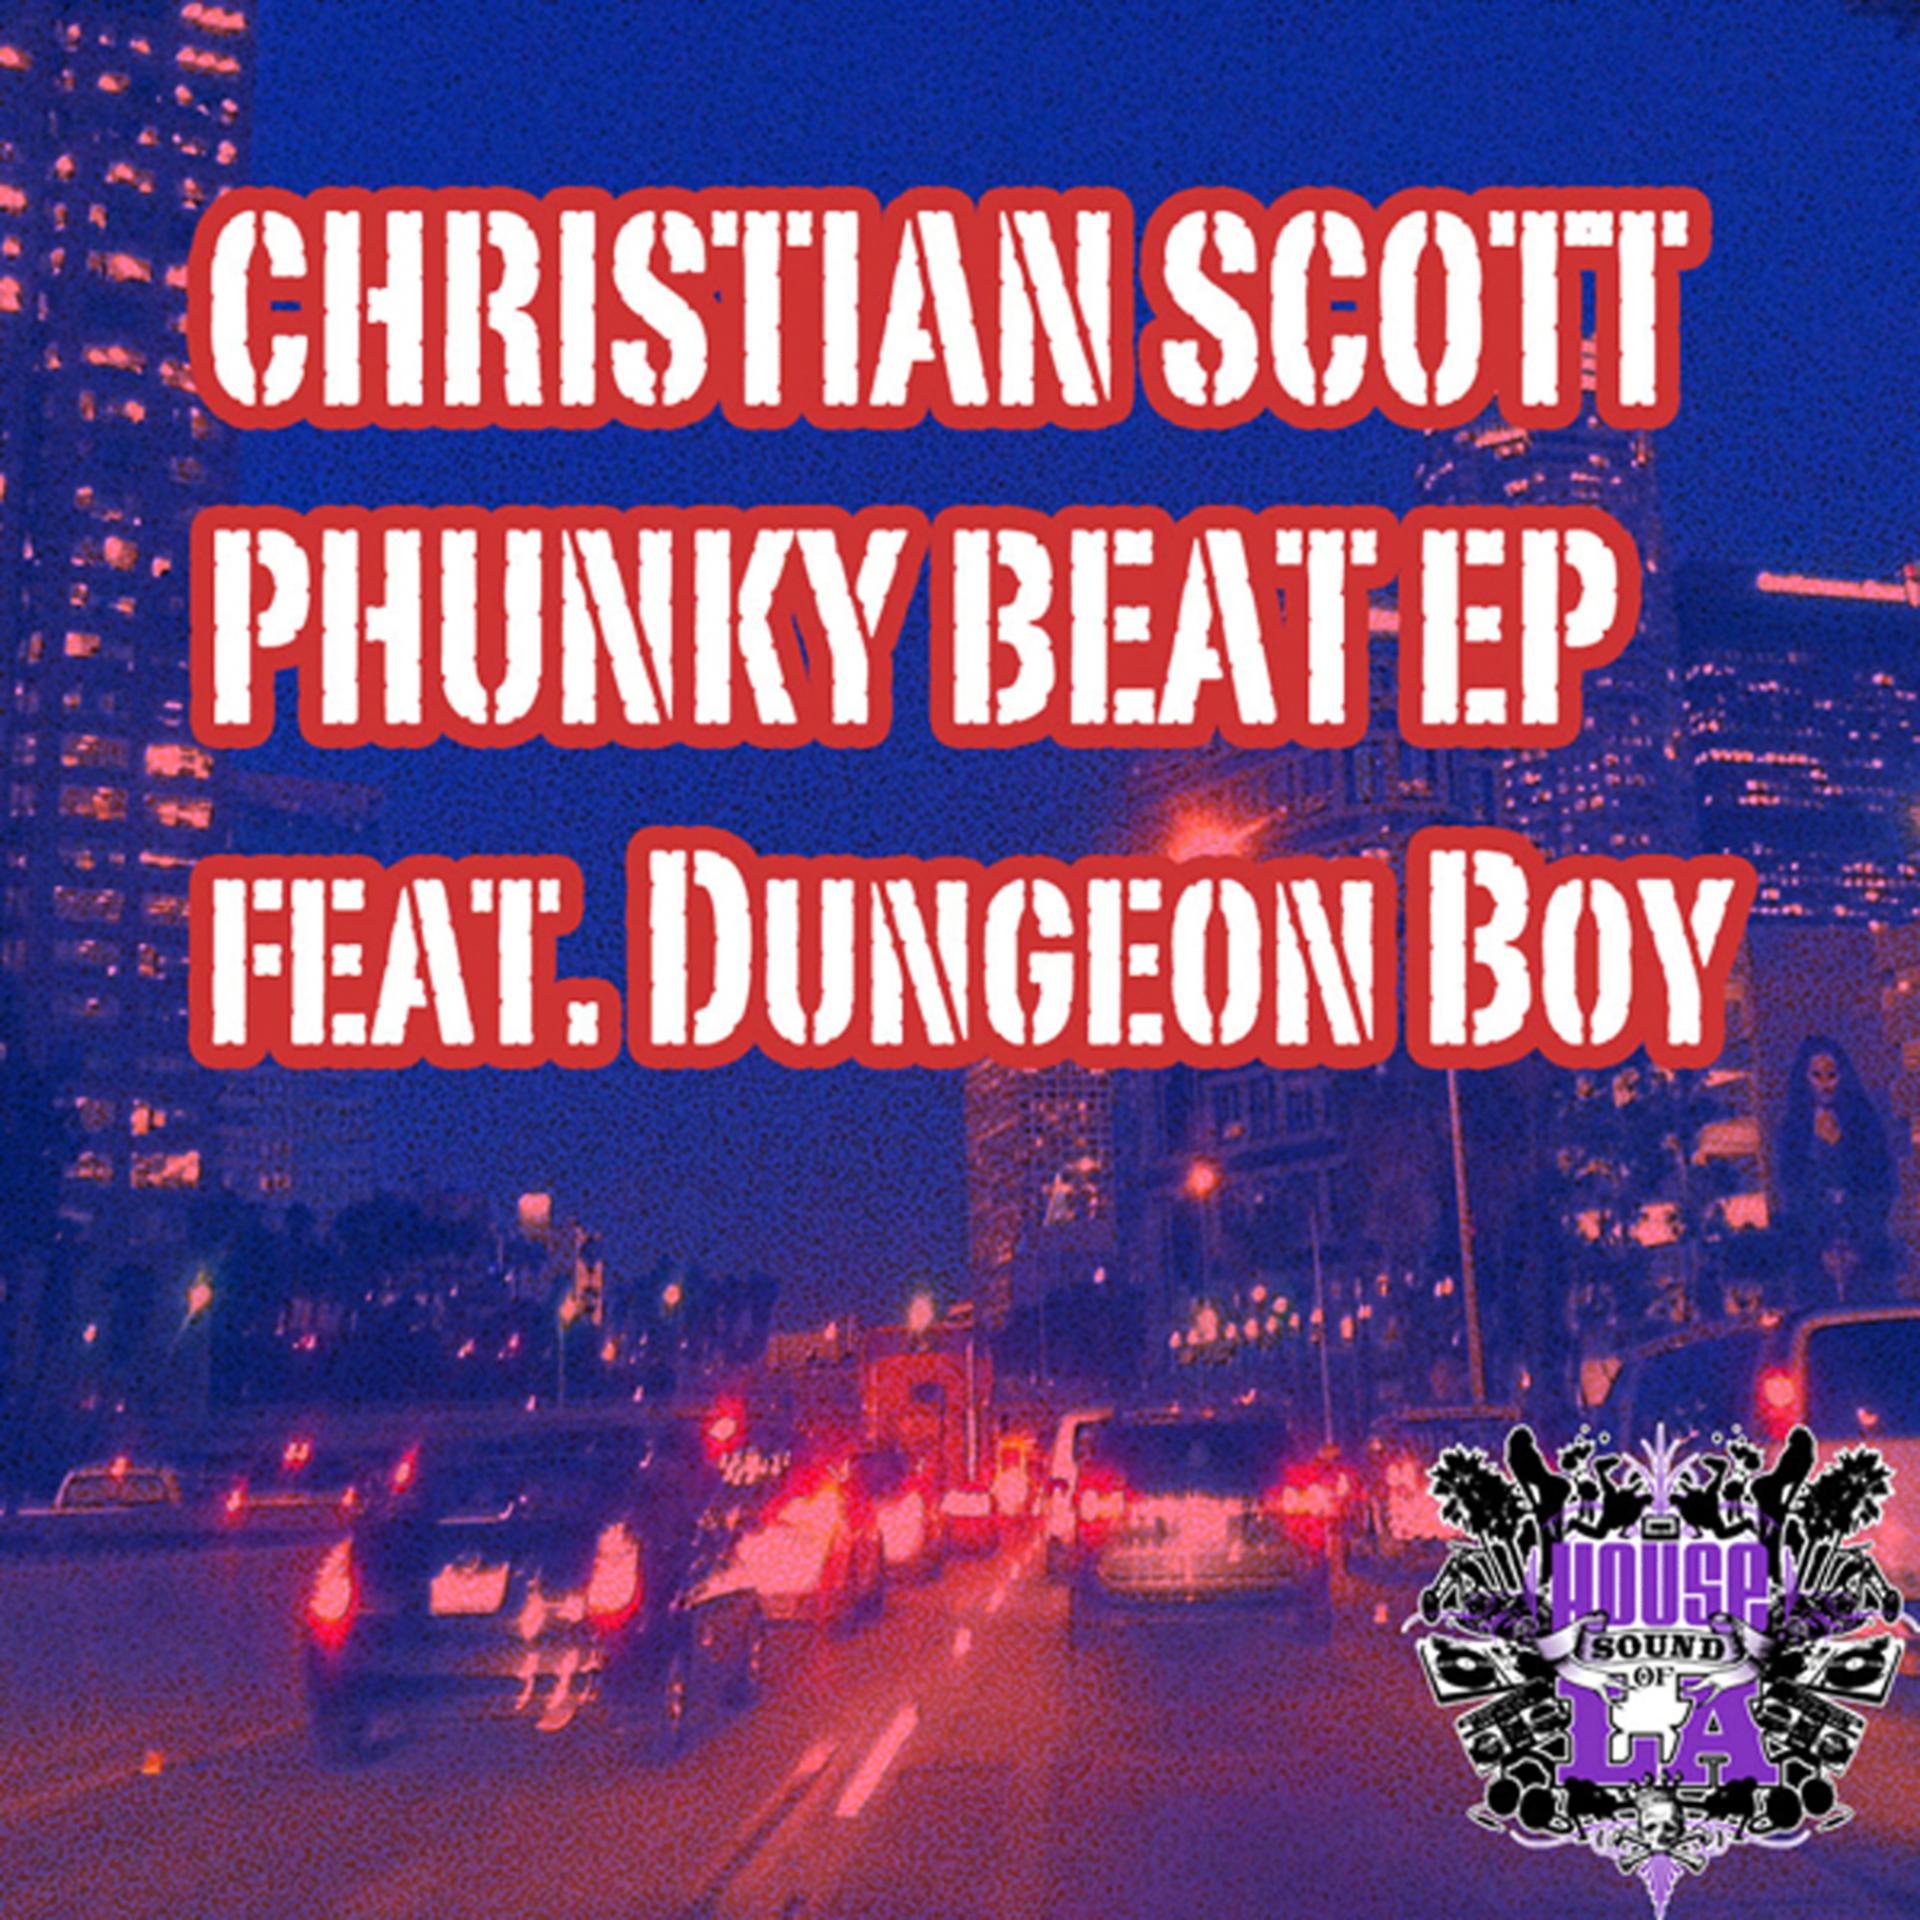 Постер к треку Dungeon Boy, Christian Scott - Put On The Phunky Beat (Christian Scott Dub)